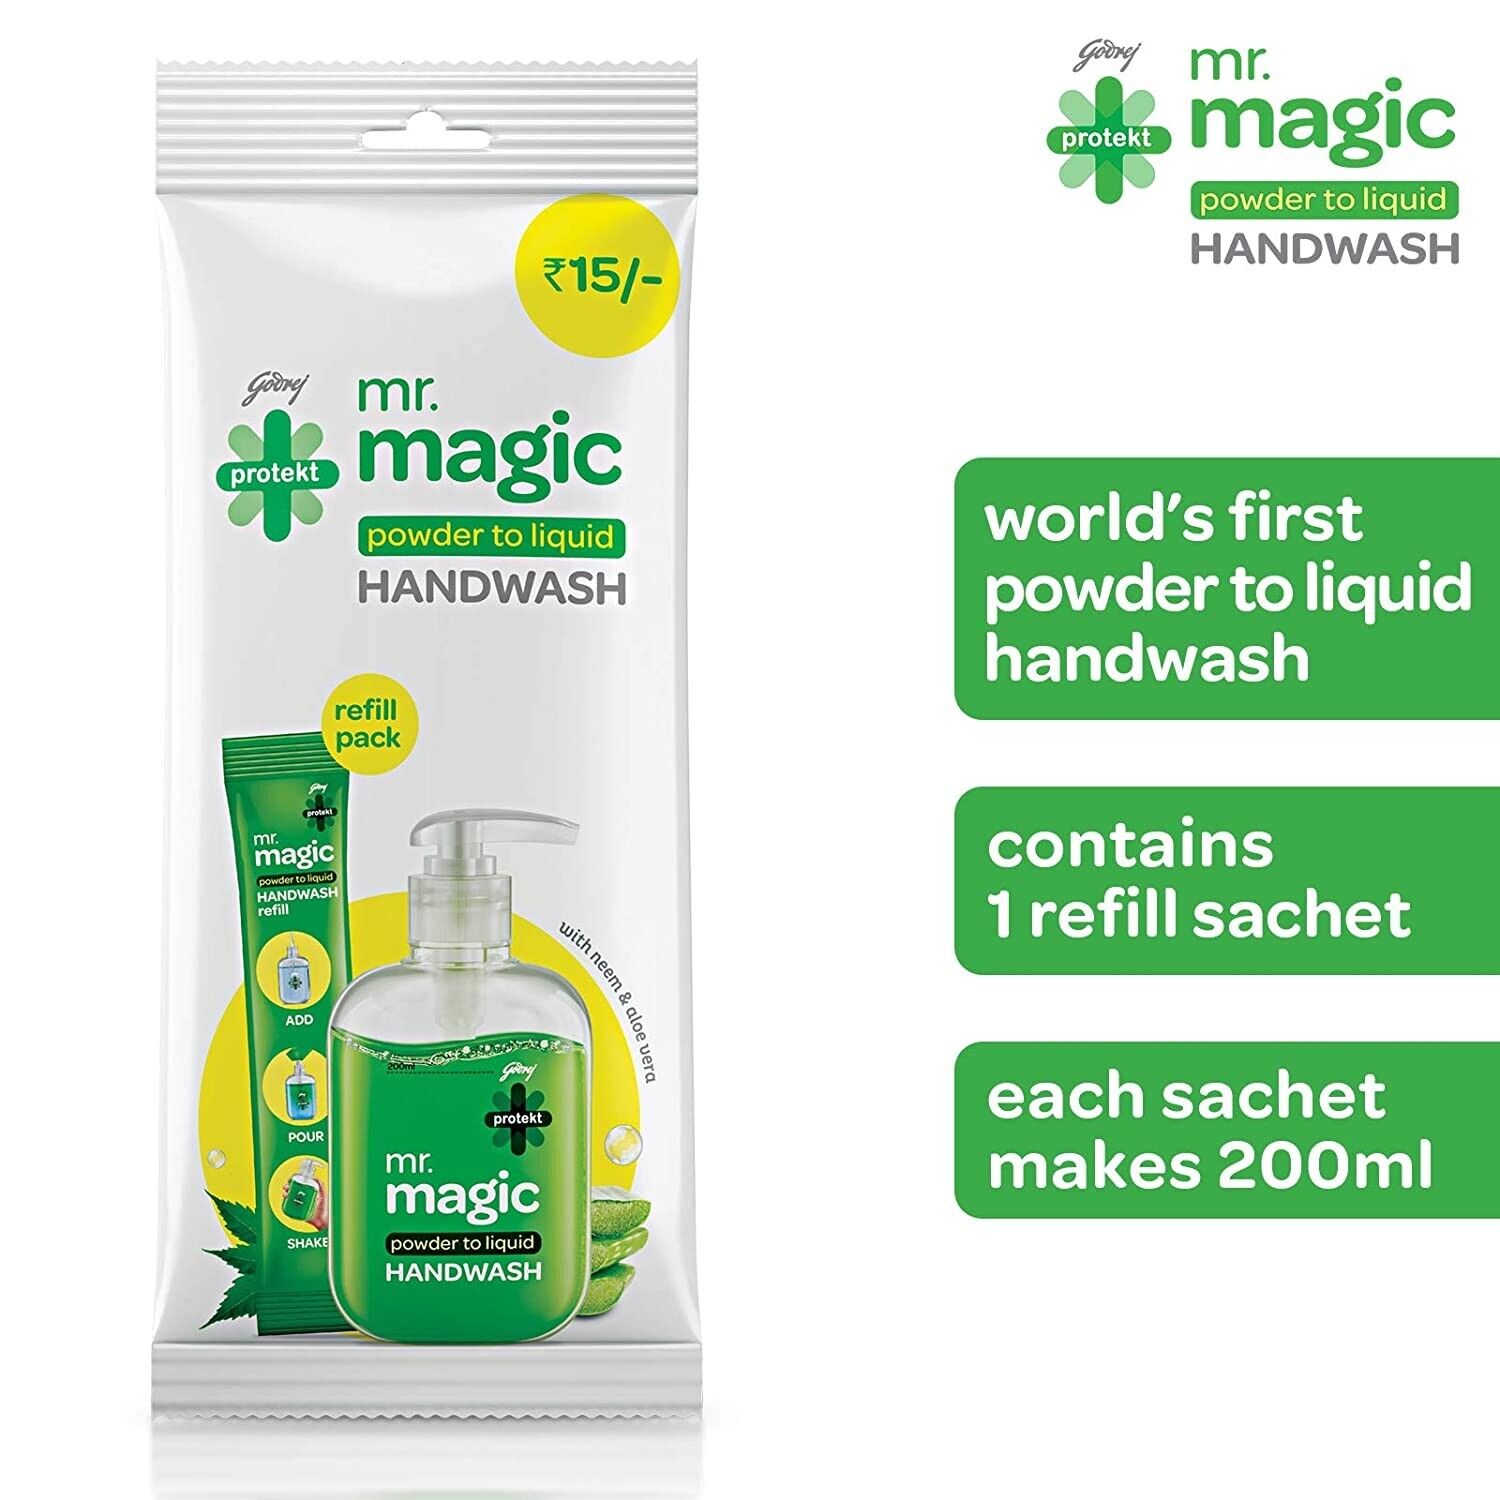 Godrej Protekt mr. magic Powder-to-Liquid Handwash, 9g & makes 200ml